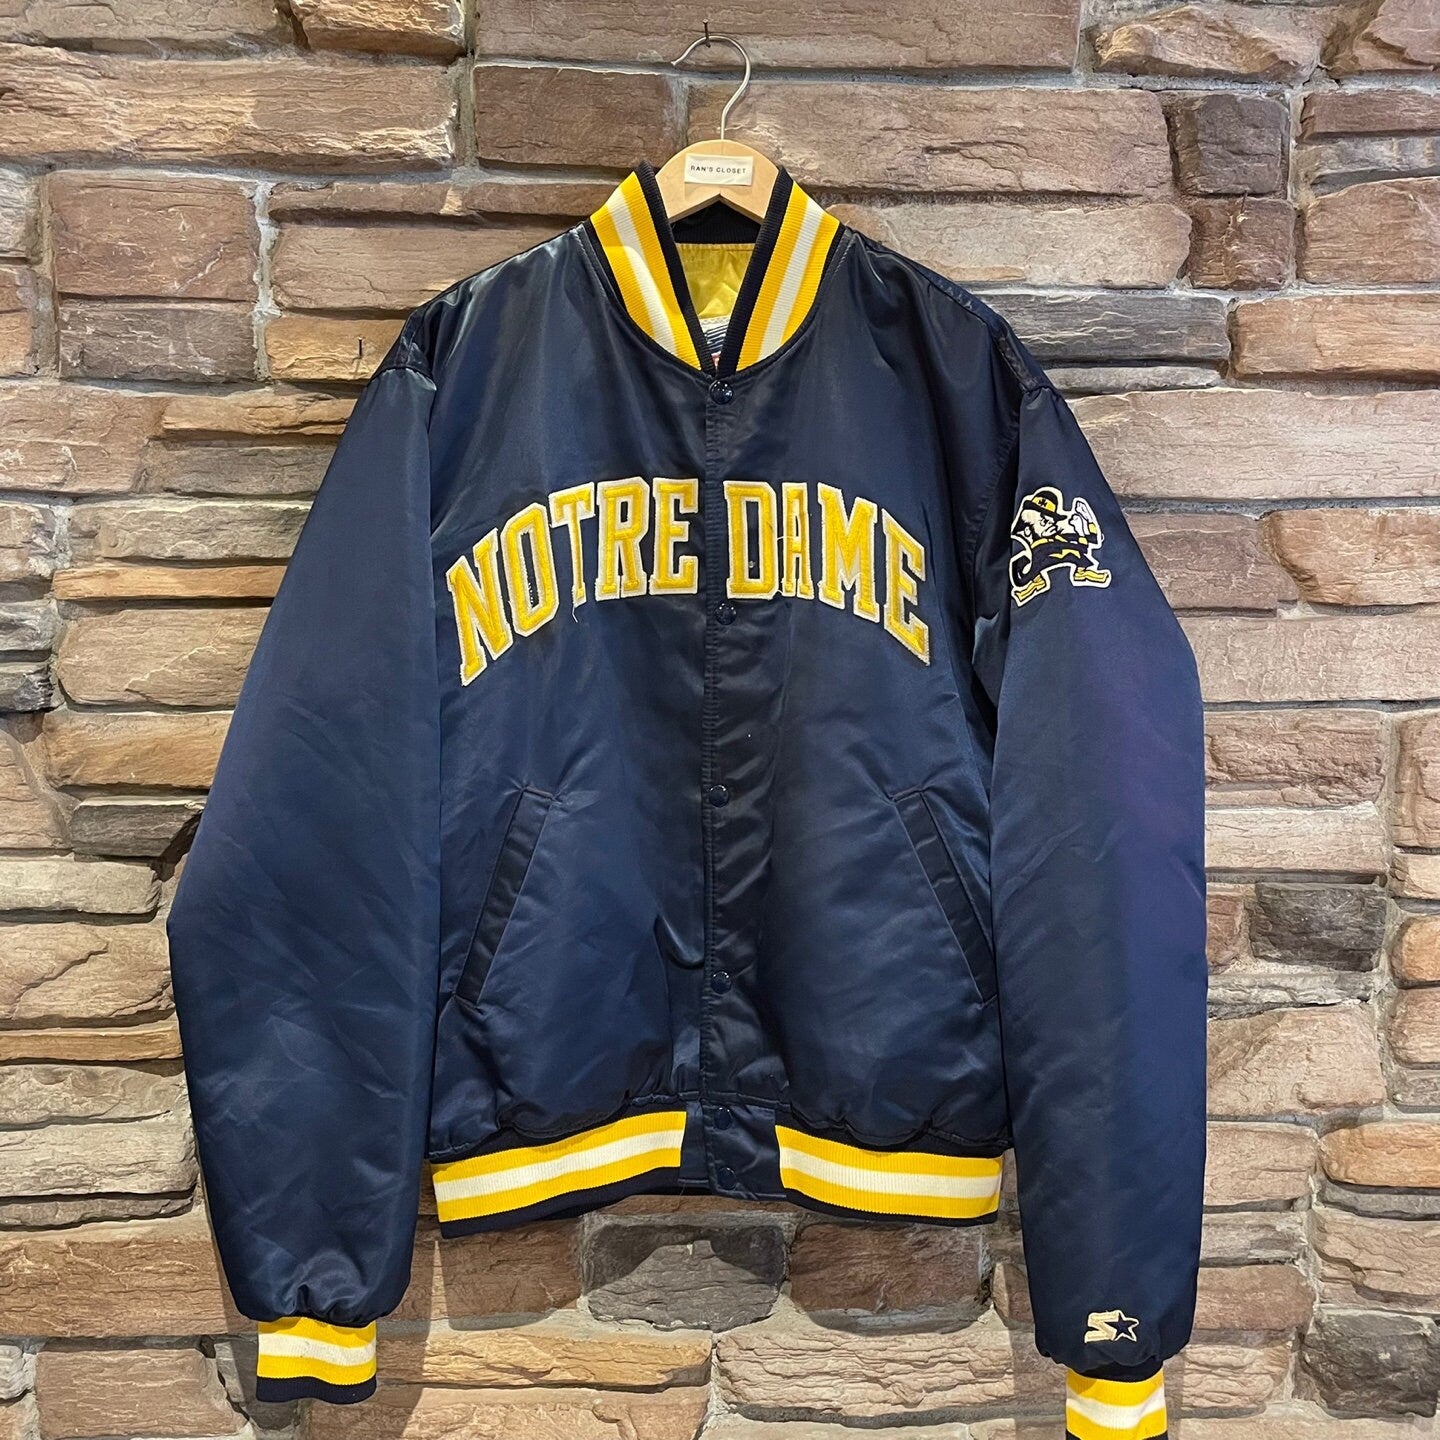 Vintage Notre Dame Fighting Irish Football Team Jacket for the University of Notre Dame Indiana | Vintage Jacket | Navy | Size XL | STQ-2164